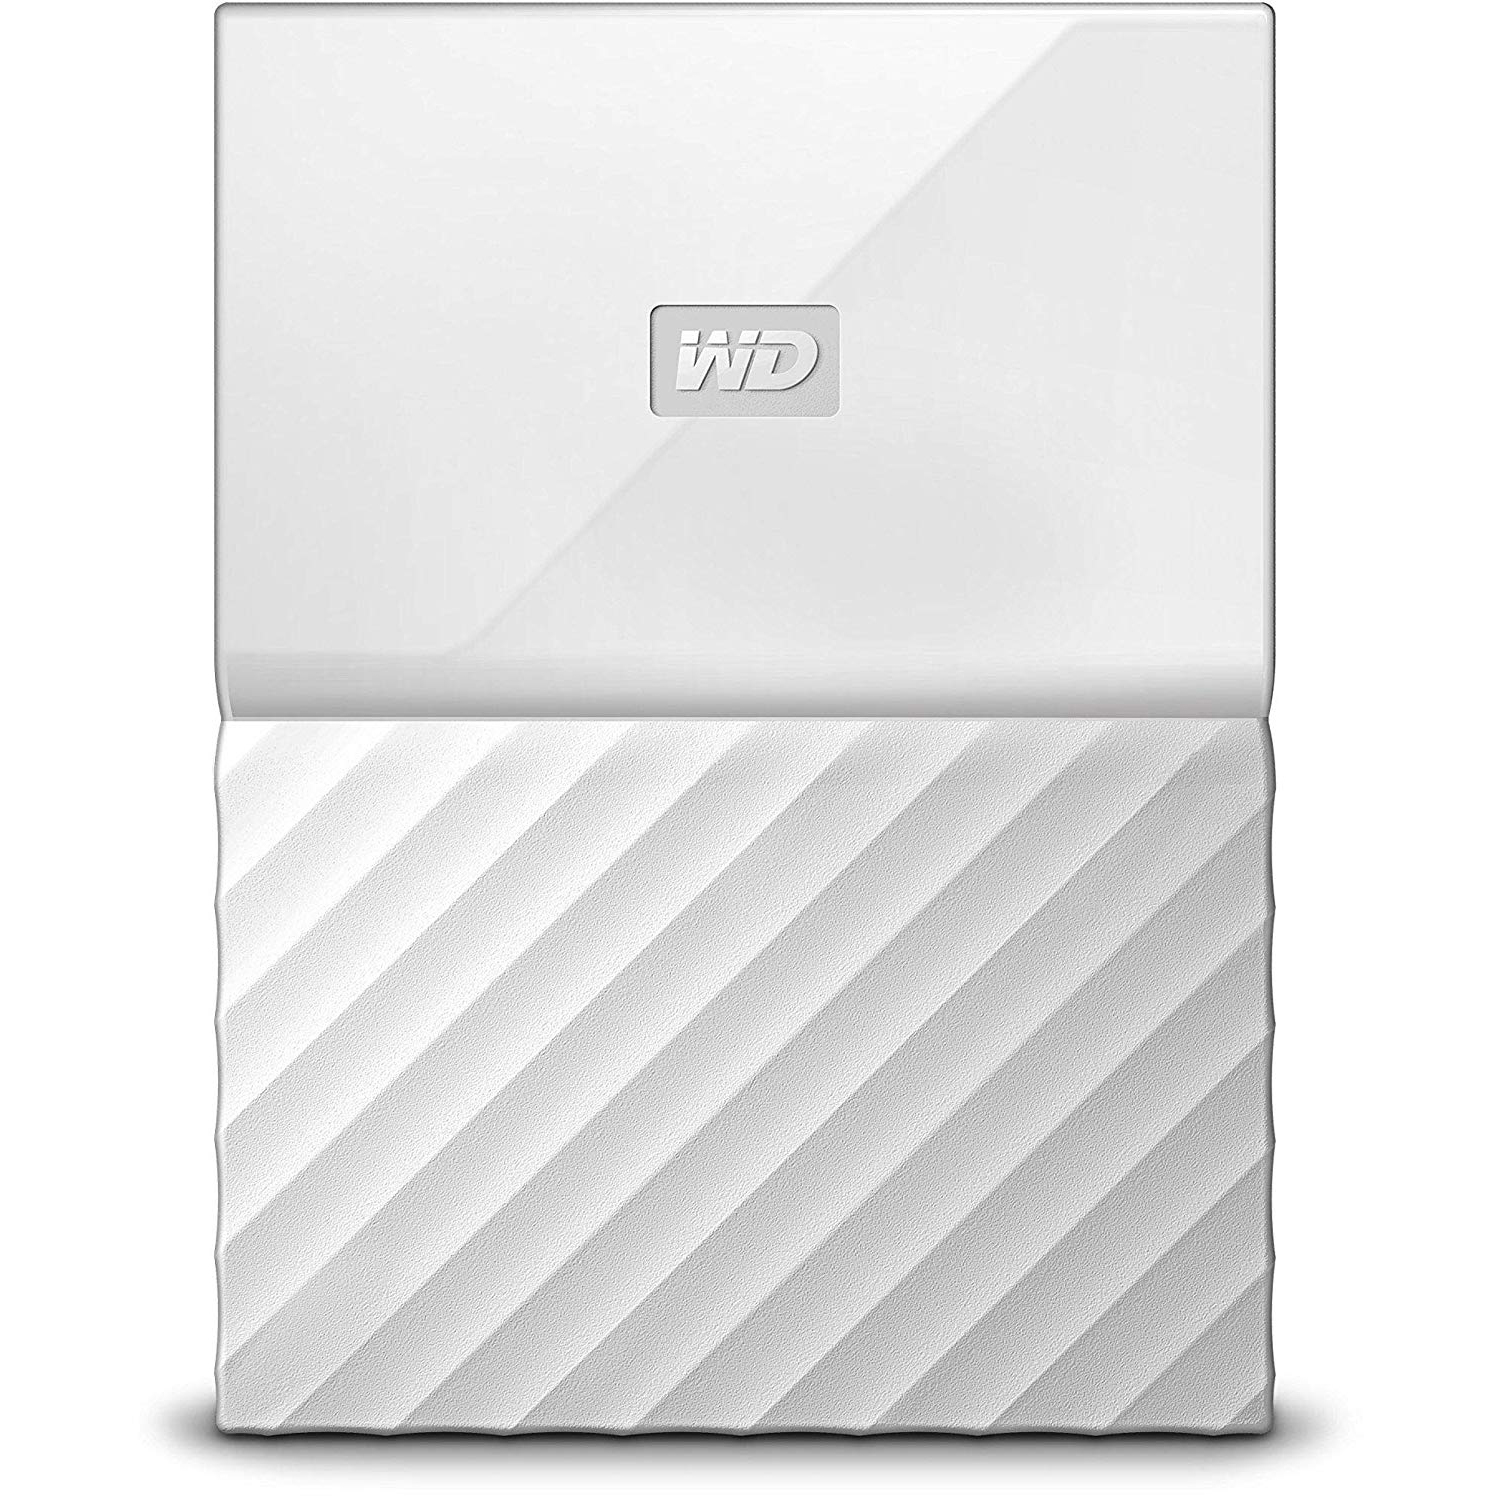 Original Western Digital My Passport White 4TB USB 3.0 External Hard Drive (WDBYFT0040BWT-WESN)